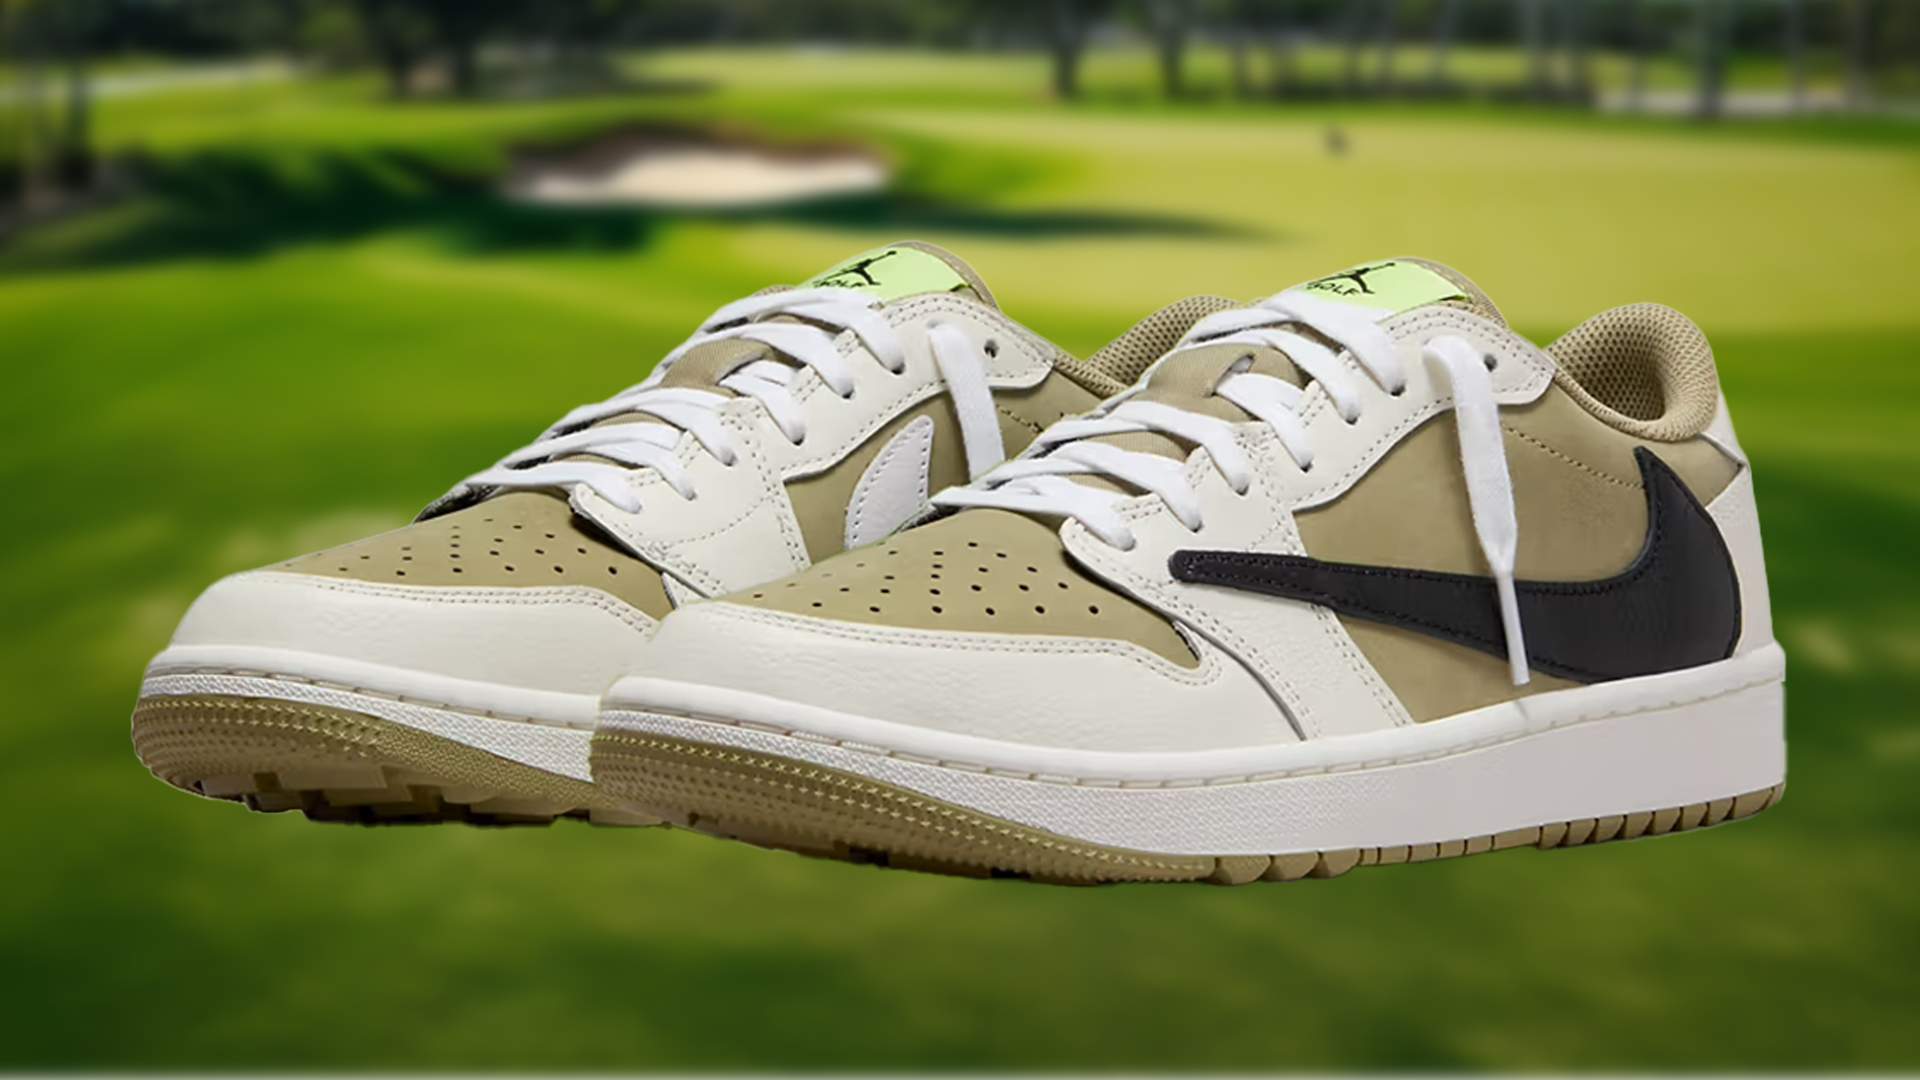 Golf Shops Requiring People to Golf to Buy Travis Scott x Jordan 1